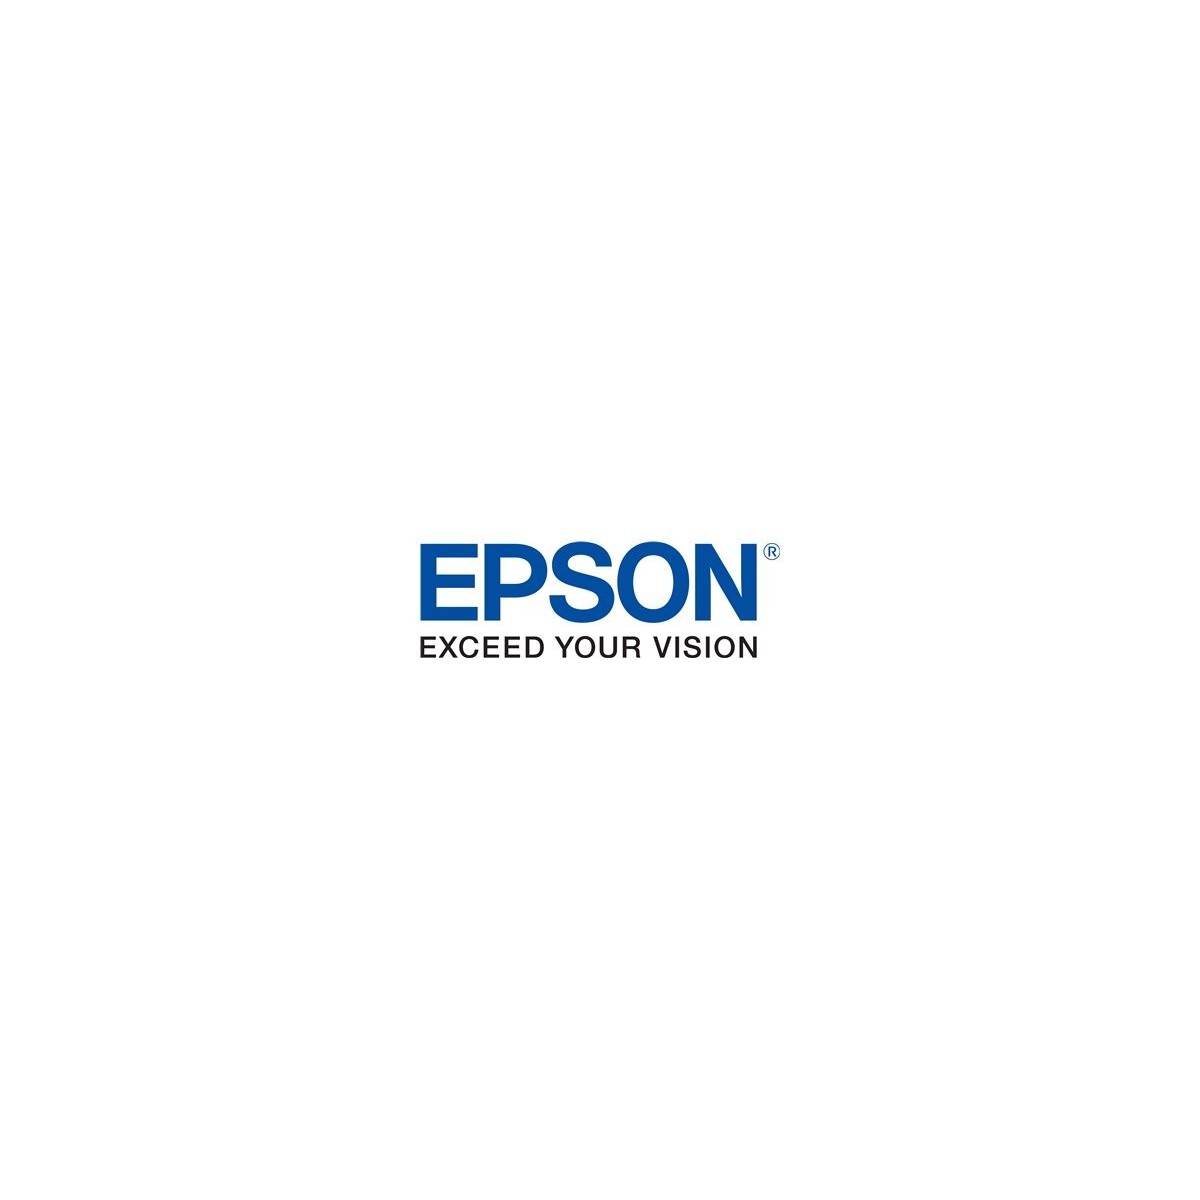 Epson Maintenance Kit 200k - Laser - 200000 pages - C13S053017BA - China - Epson - - EPL-N3000T - EPL-N3000DT - EPL-N3000D - EPL